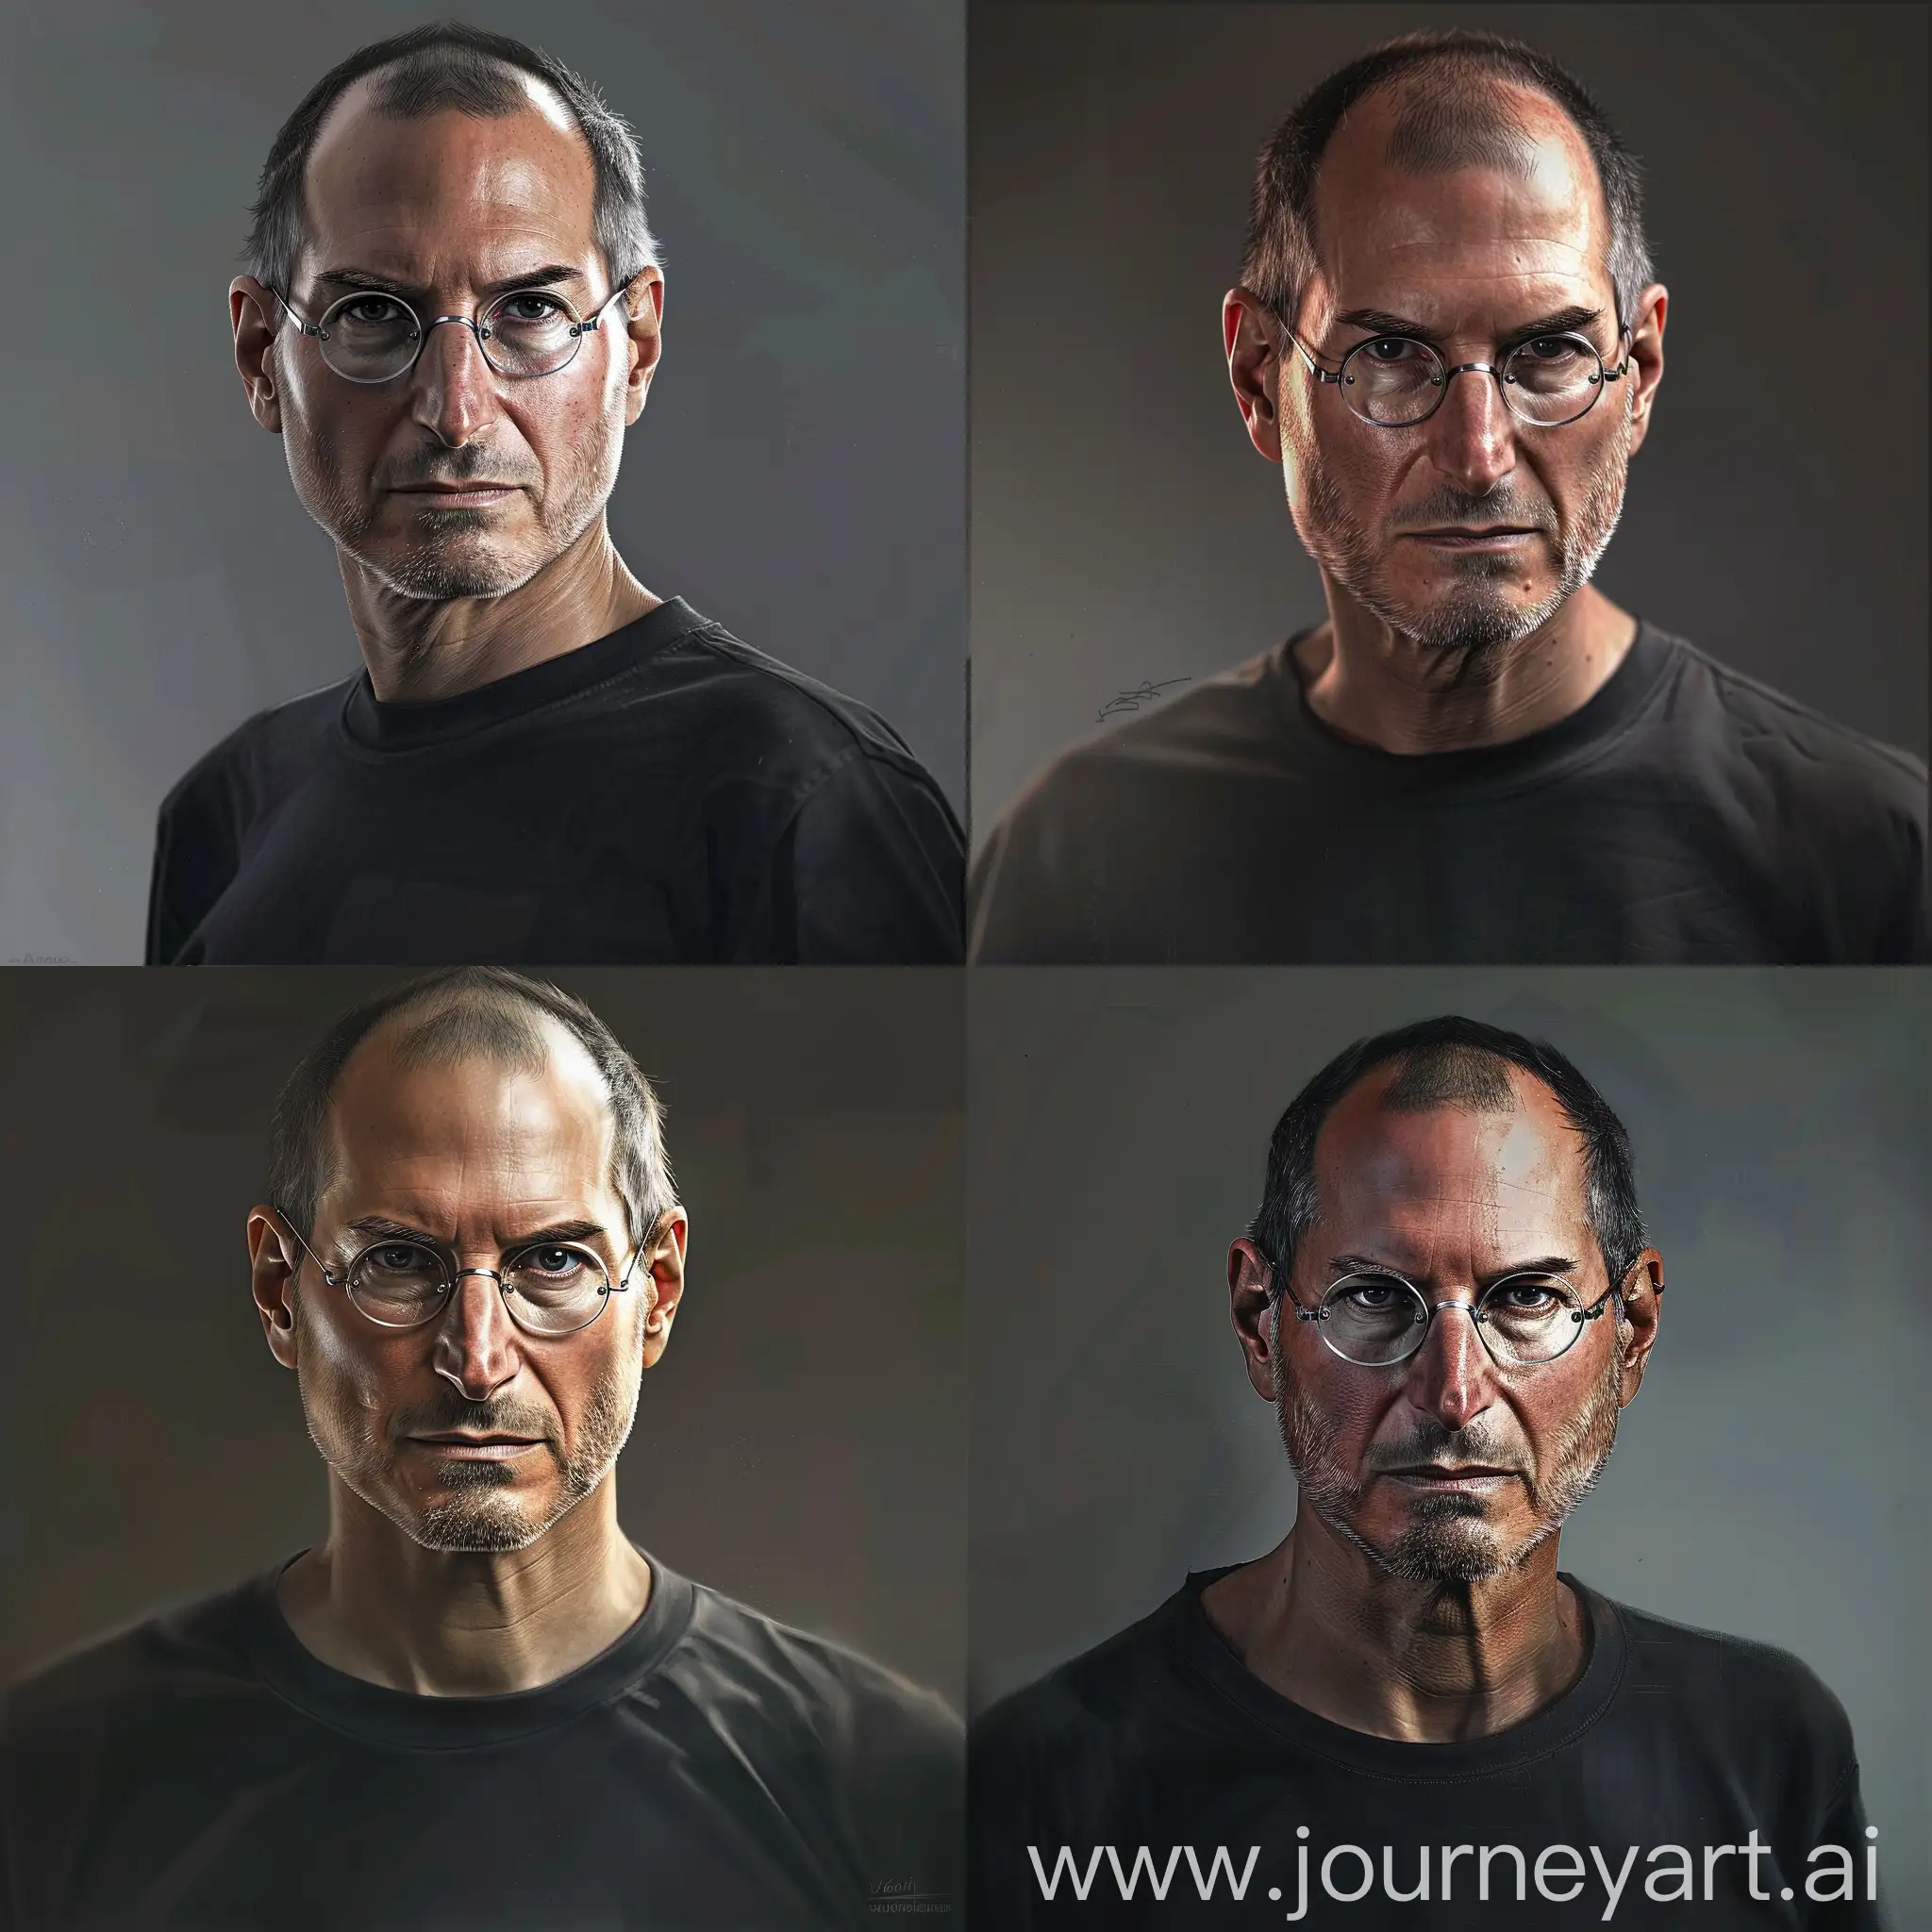 HyperRealistic-Portrait-of-Steve-Jobs-Intense-Determination-in-Closeup-View